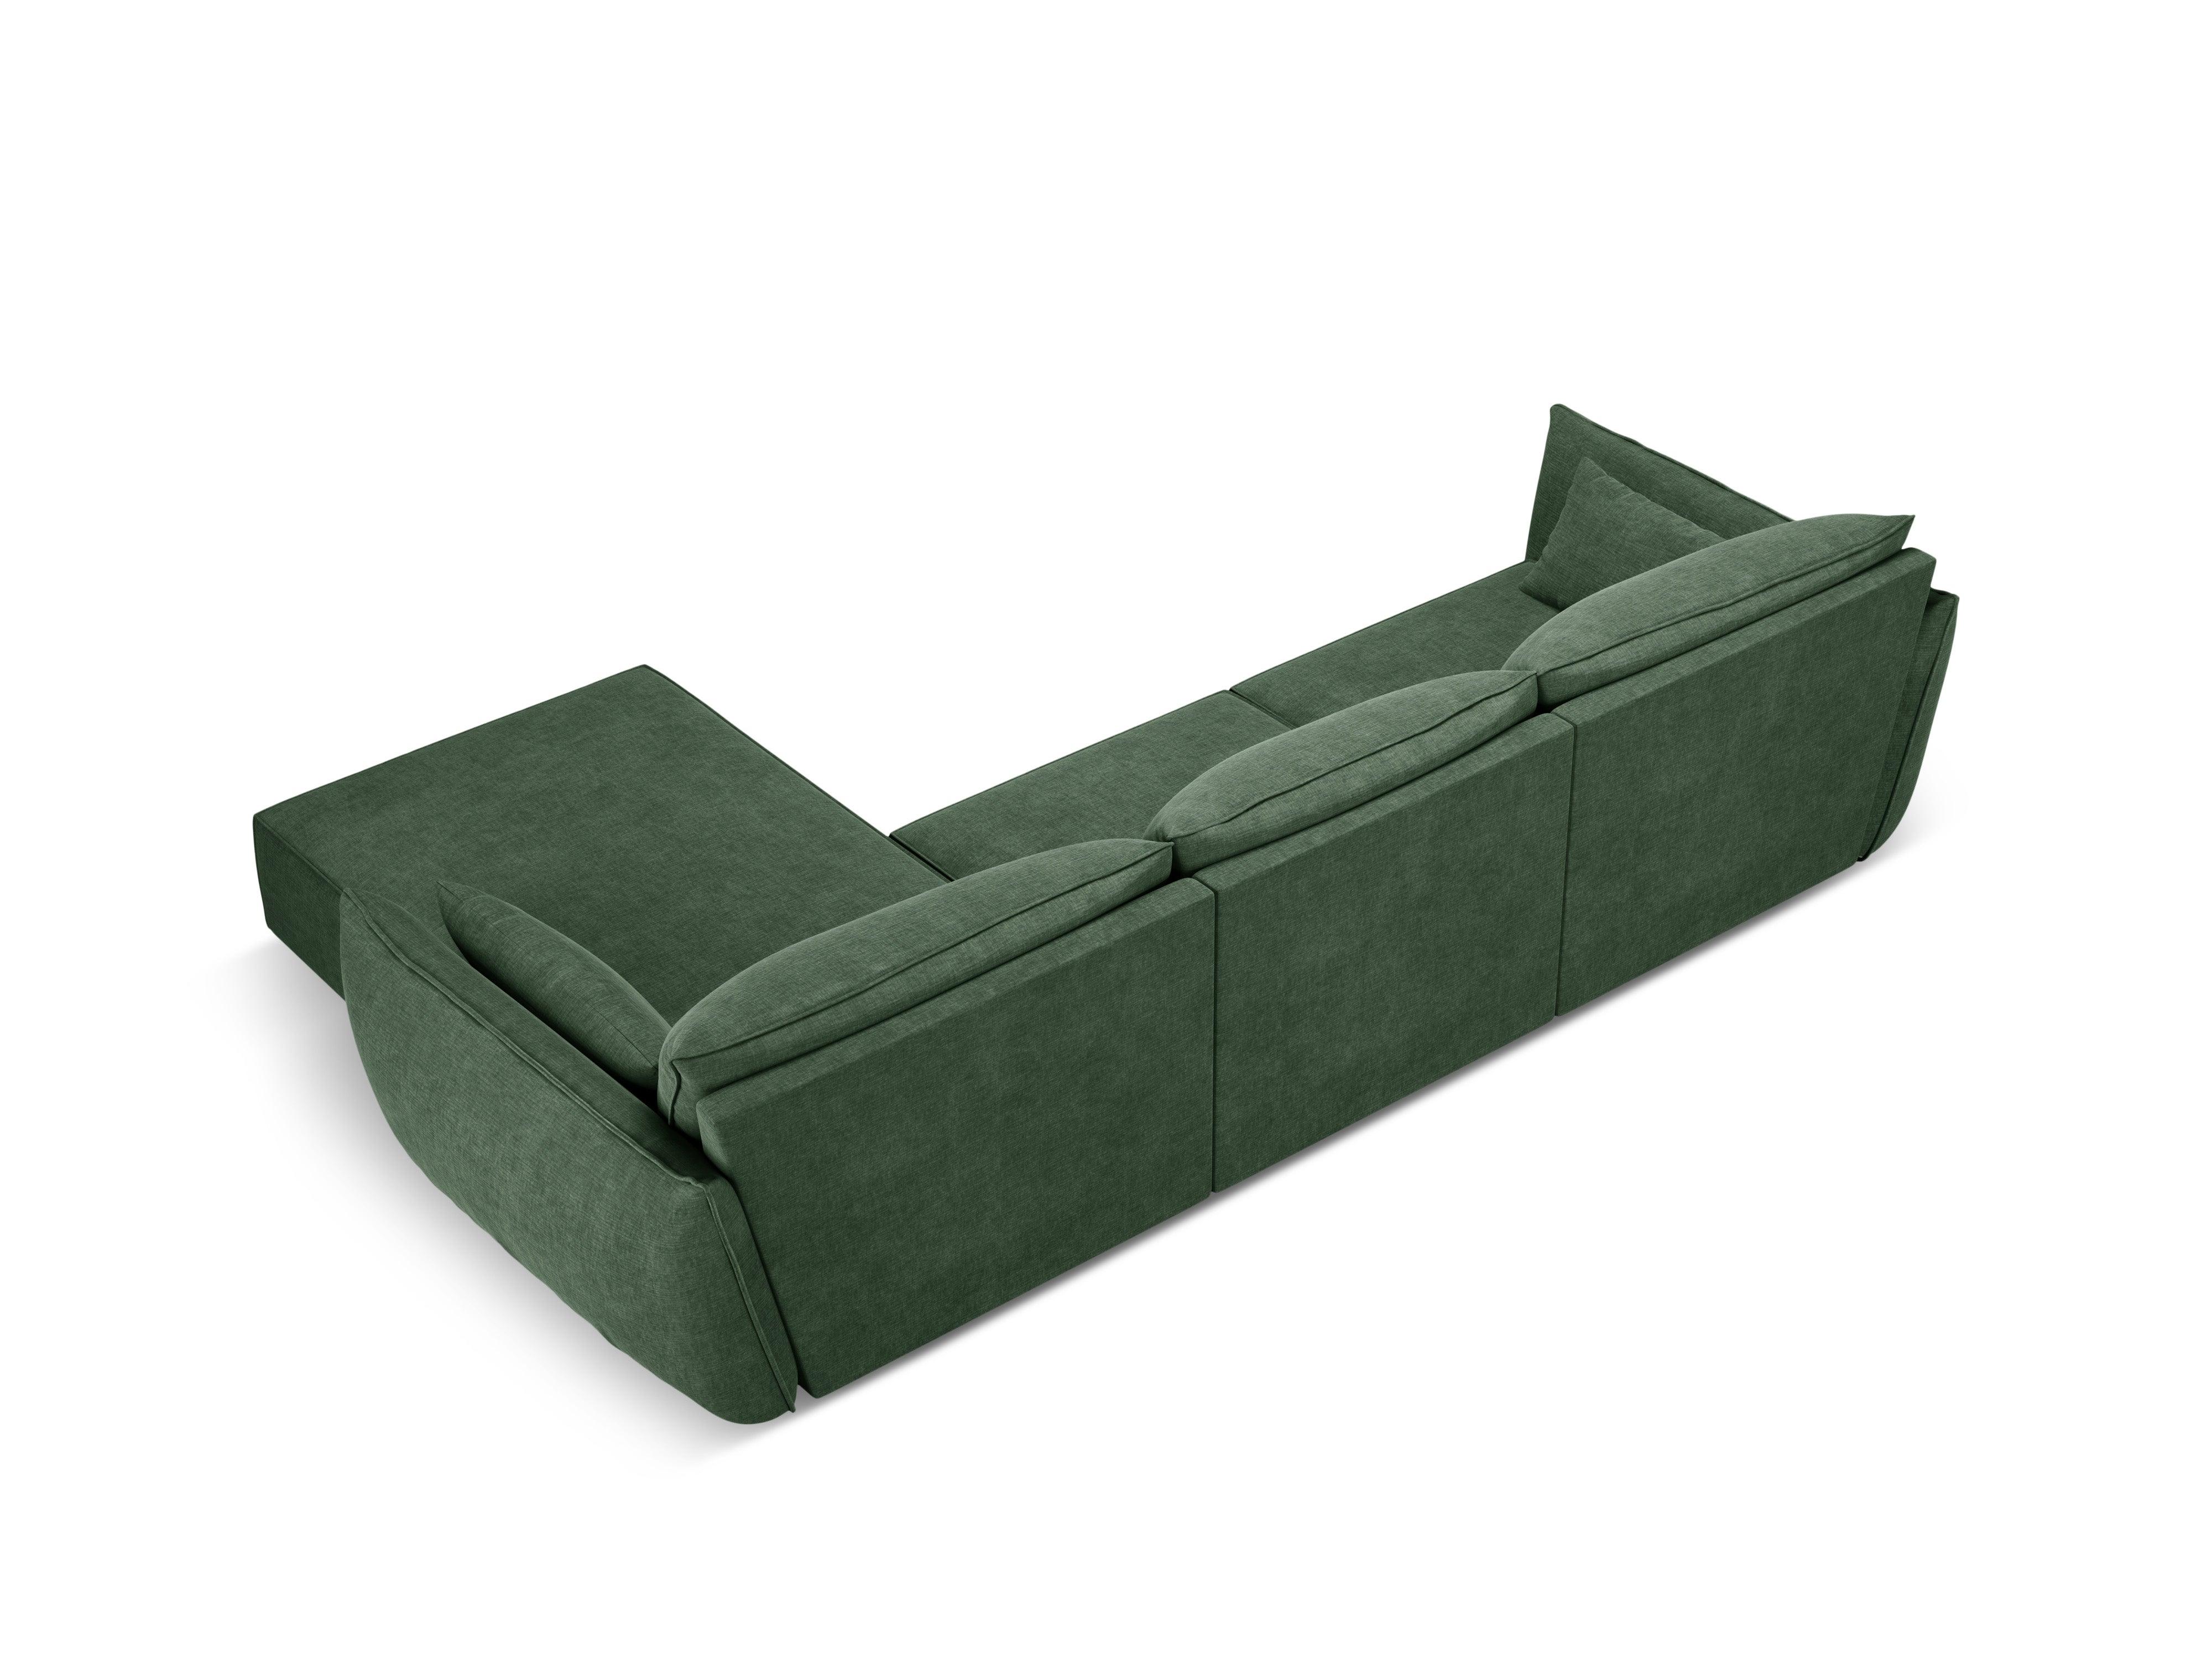 Right Corner Sofa, "Vanda", 4 Seats, 300x166x85
Made in Europe, Mazzini Sofas, Eye on Design